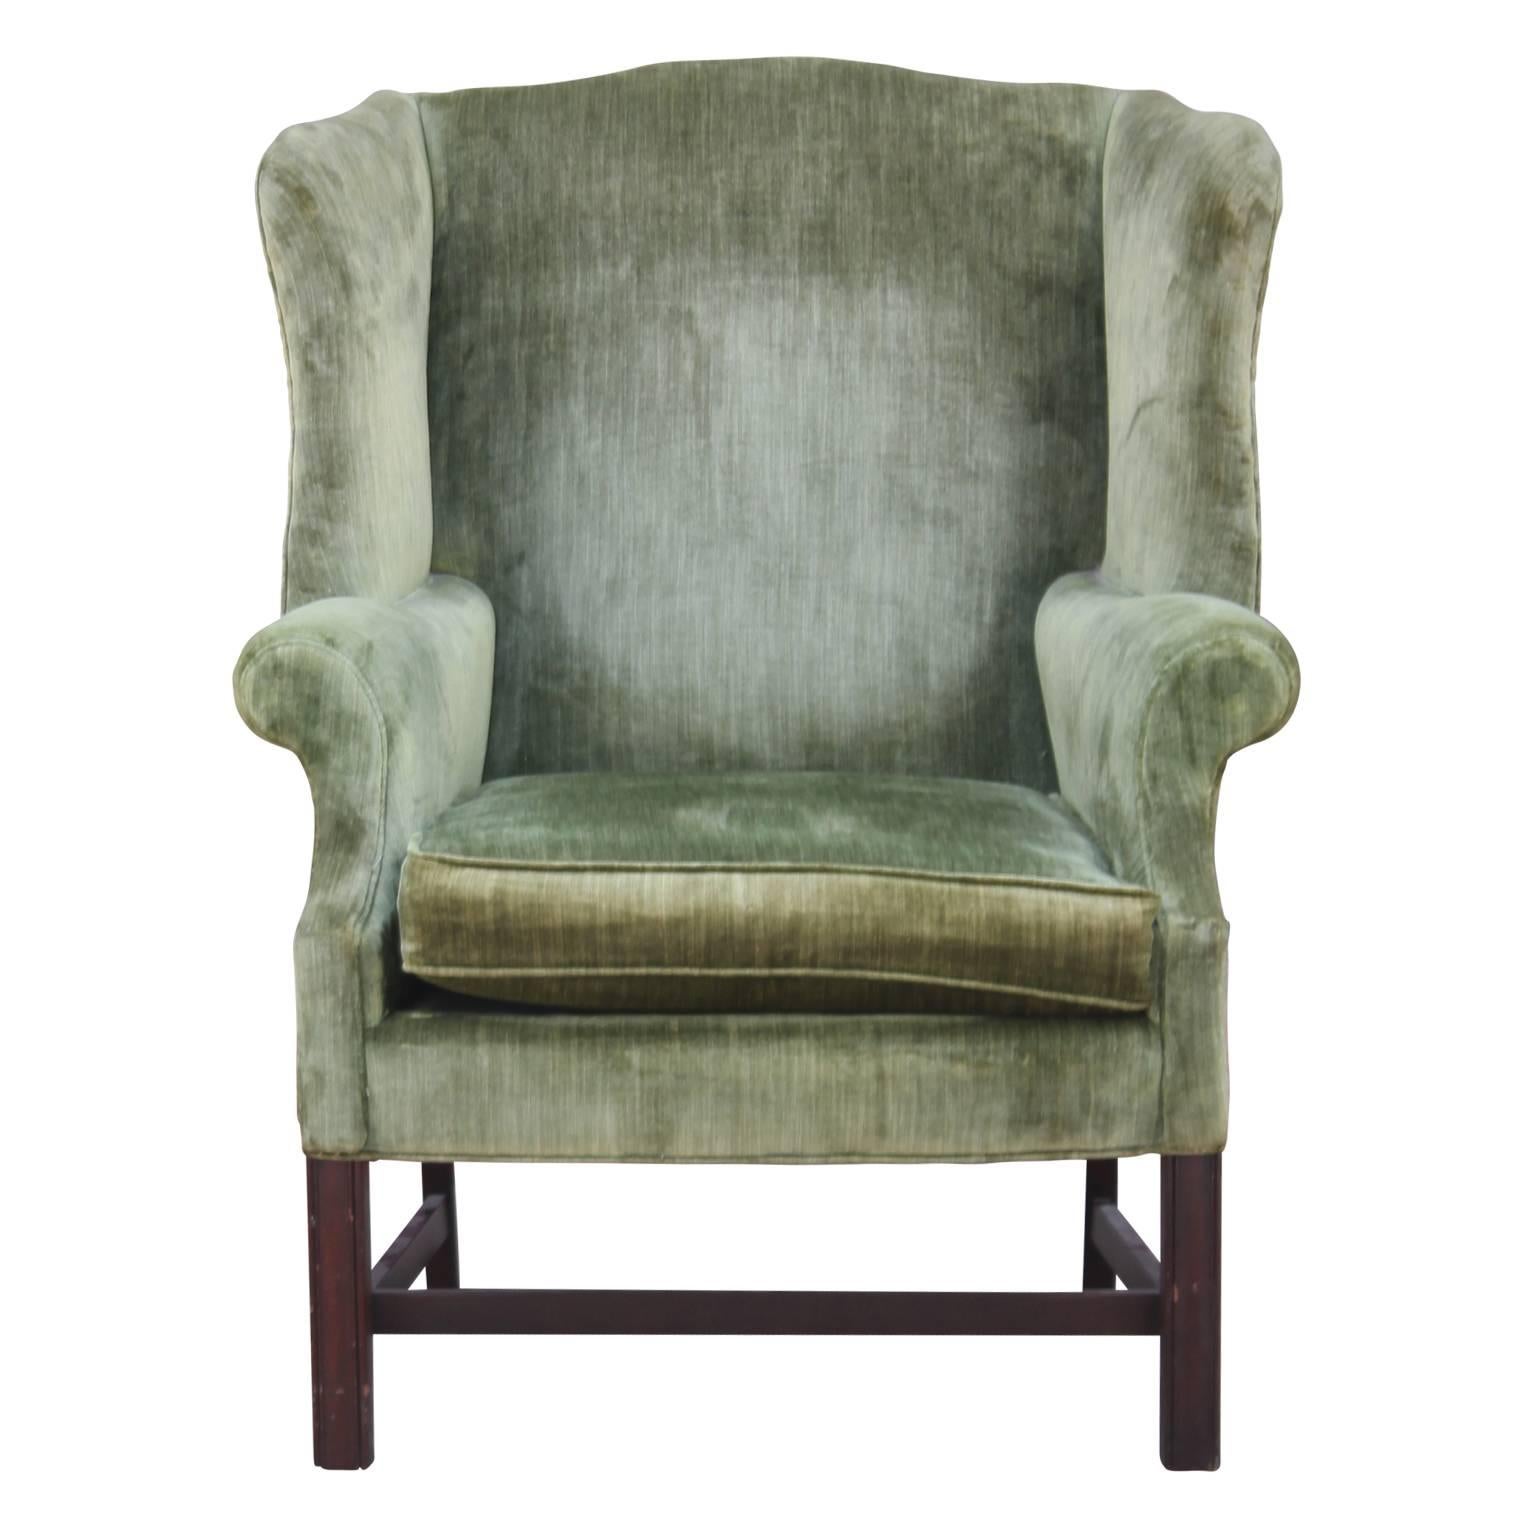 Pair of modern green velvet mahogany wingback lounge chairs.